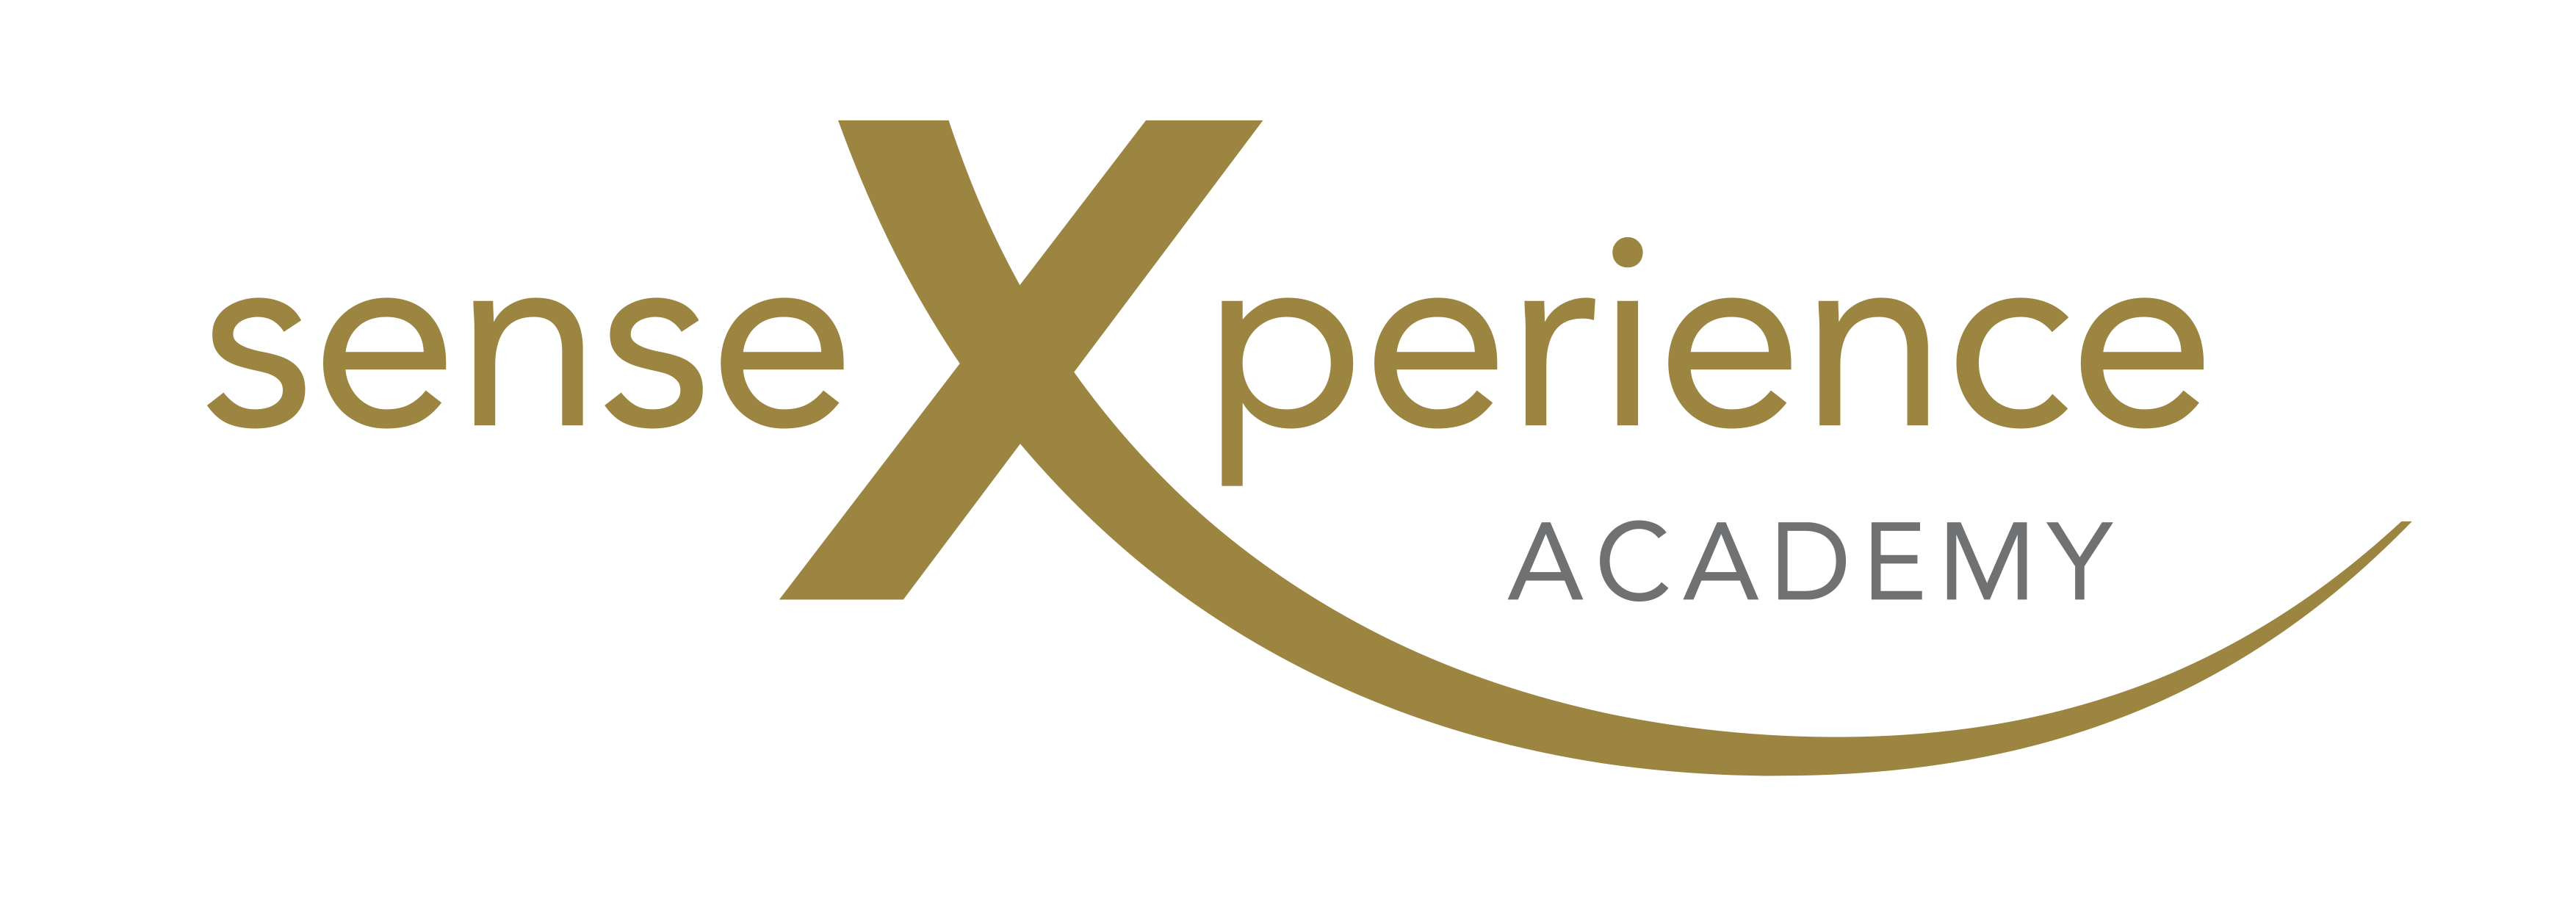 senseXperience Academy